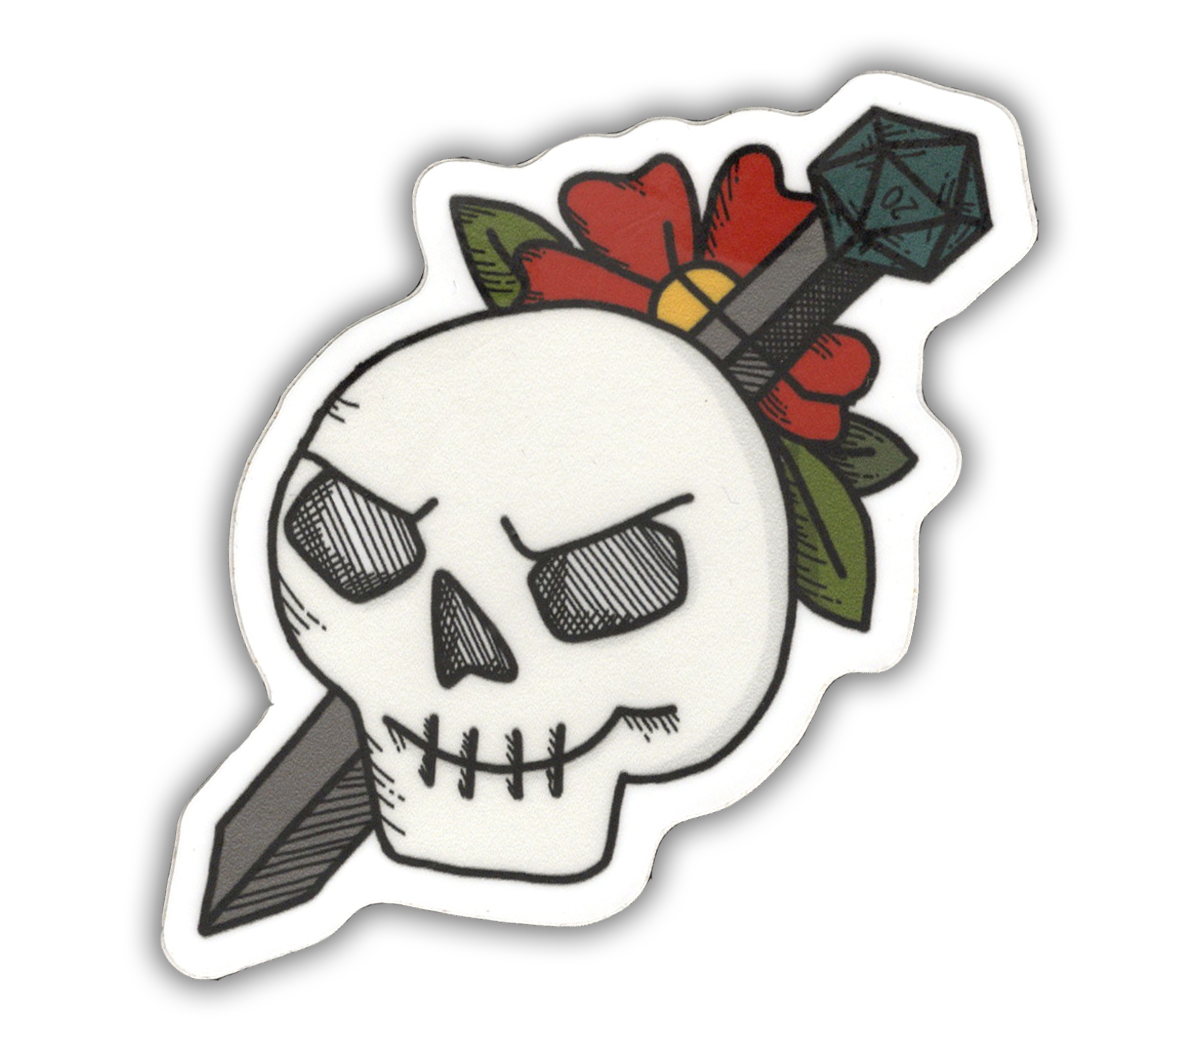 Skull with d20 Sword - tattoo flash style vinyl sticker - waterproof, UV-proof